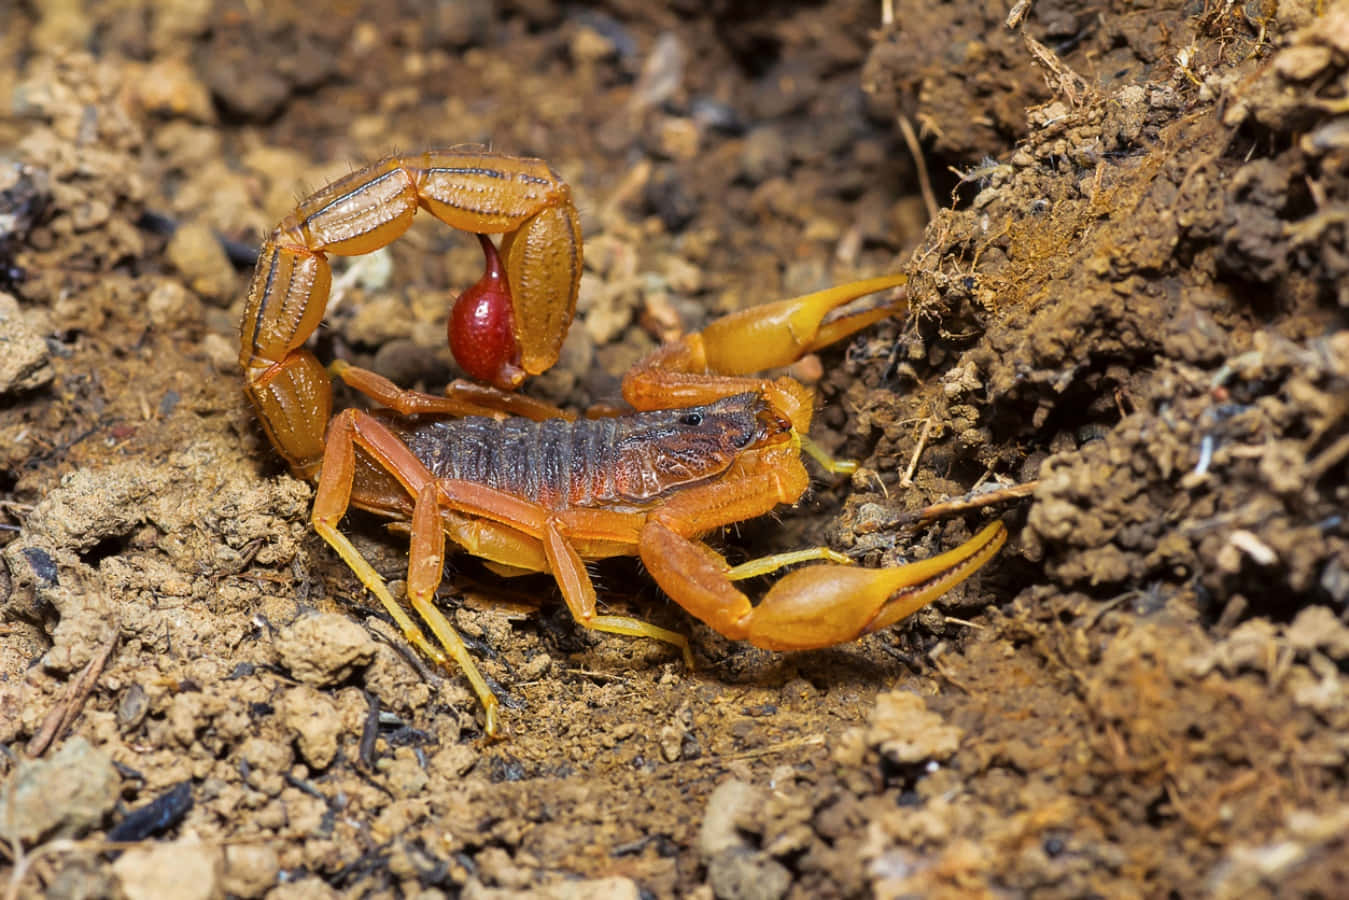 A Scorpion, a Venomous Predator